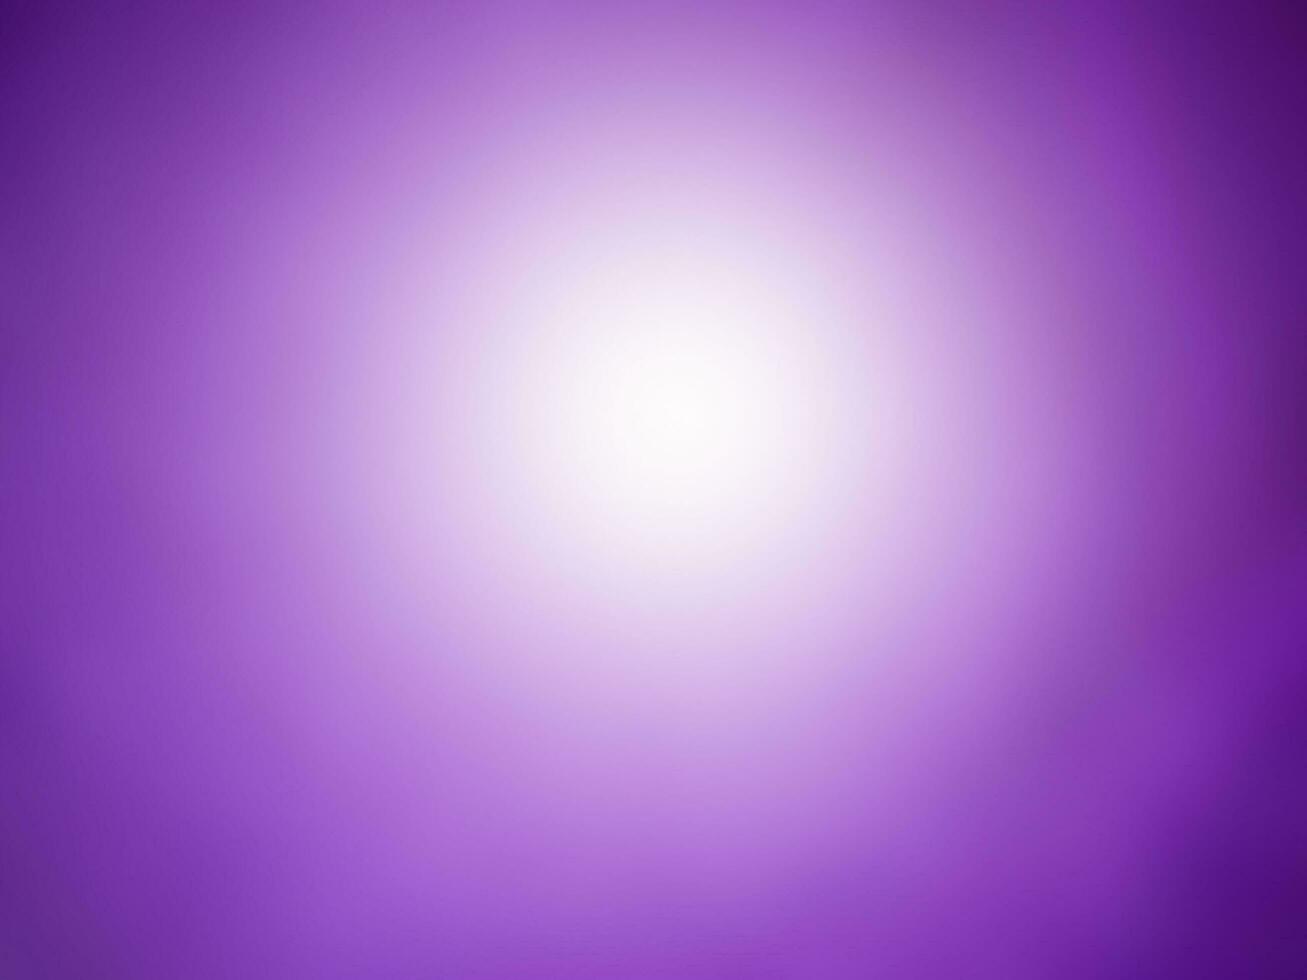 Luxurious purple velvet background, Stock image